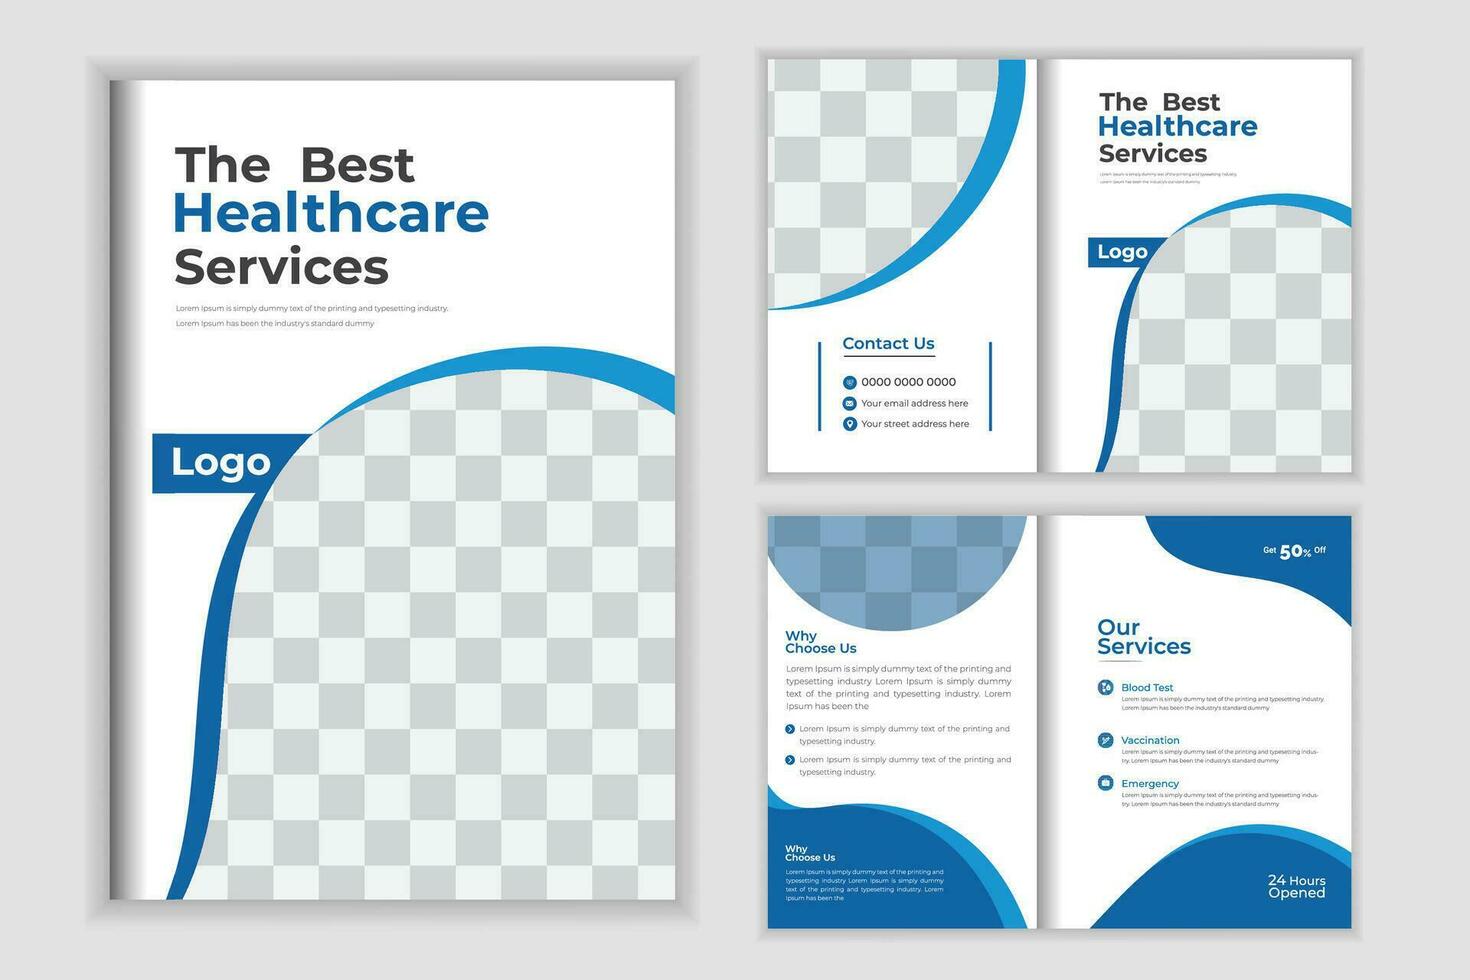 Medical Bi-Fold Brochure Design Template For Your Business vector